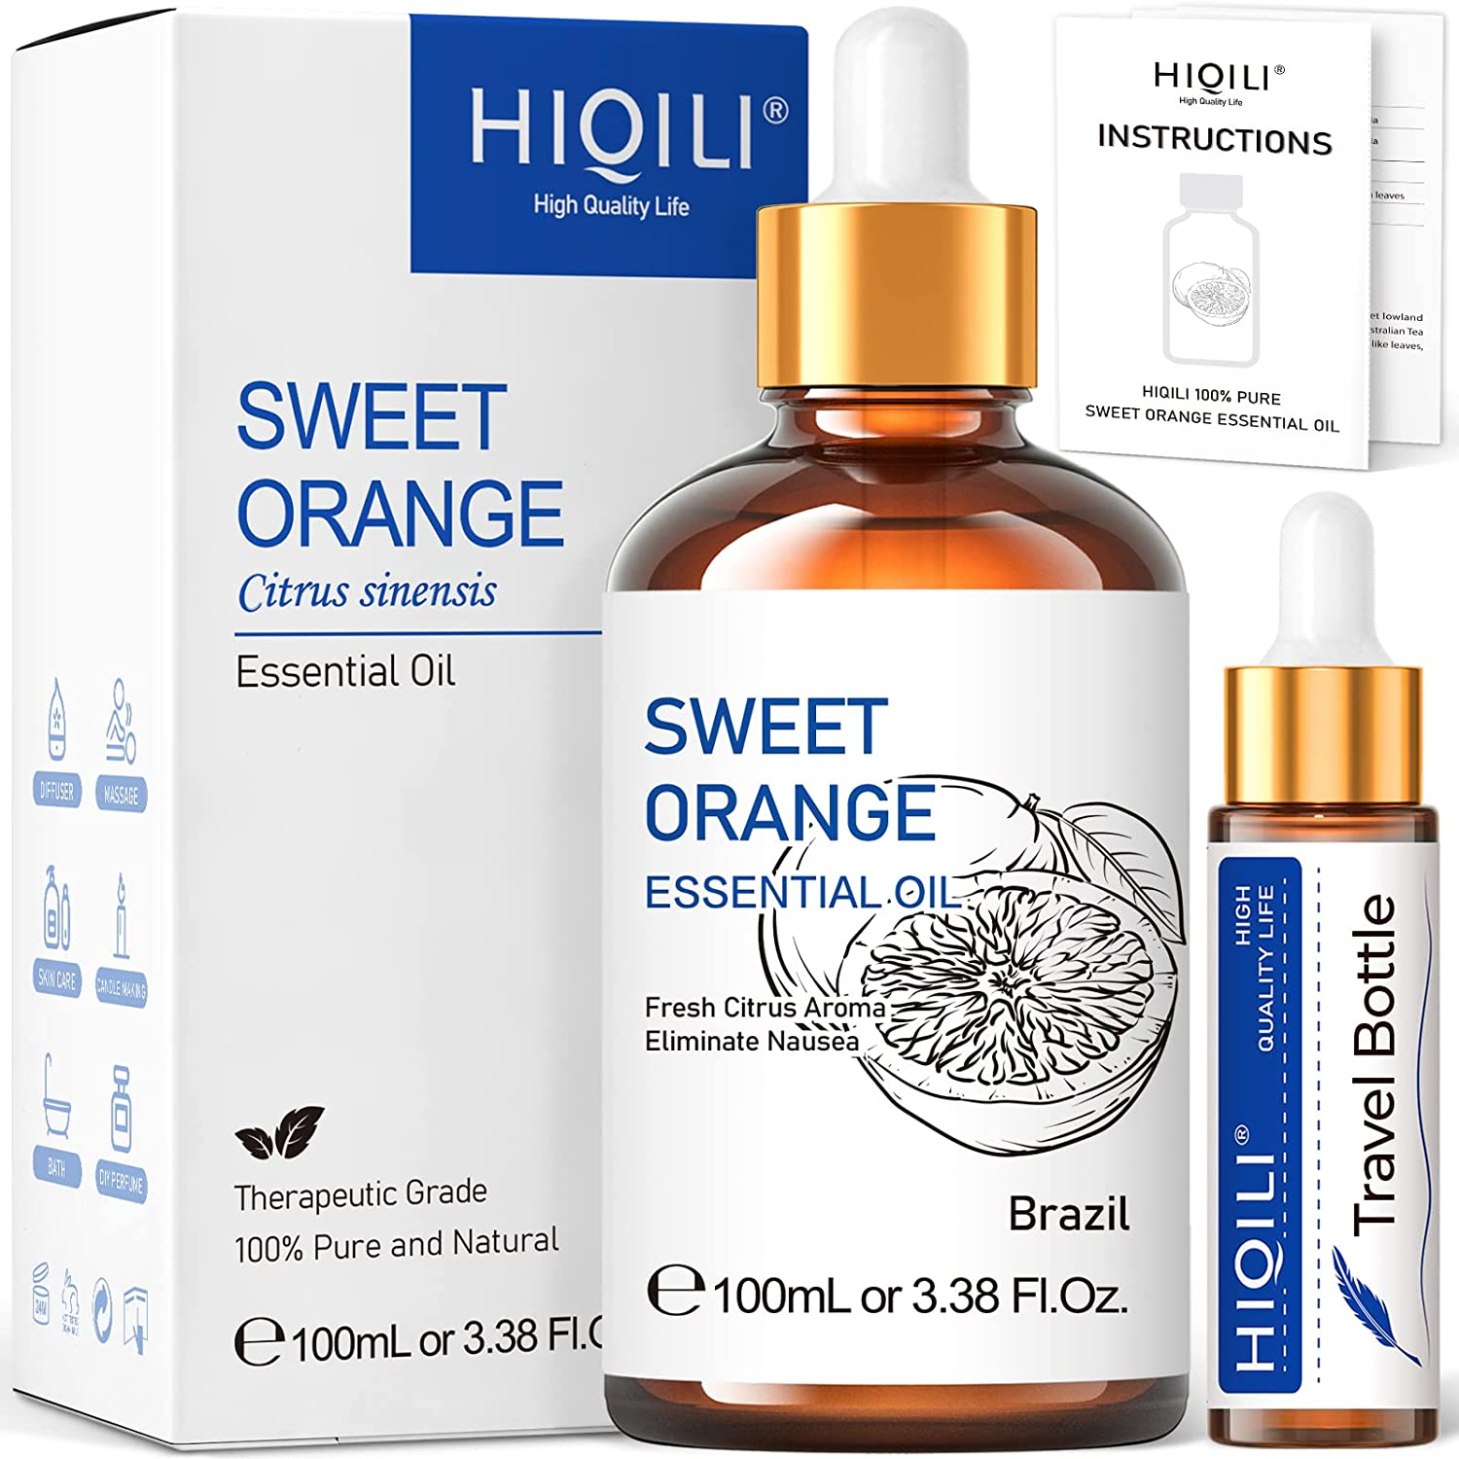 A bottle of Hiqili Orange Essential Oil.